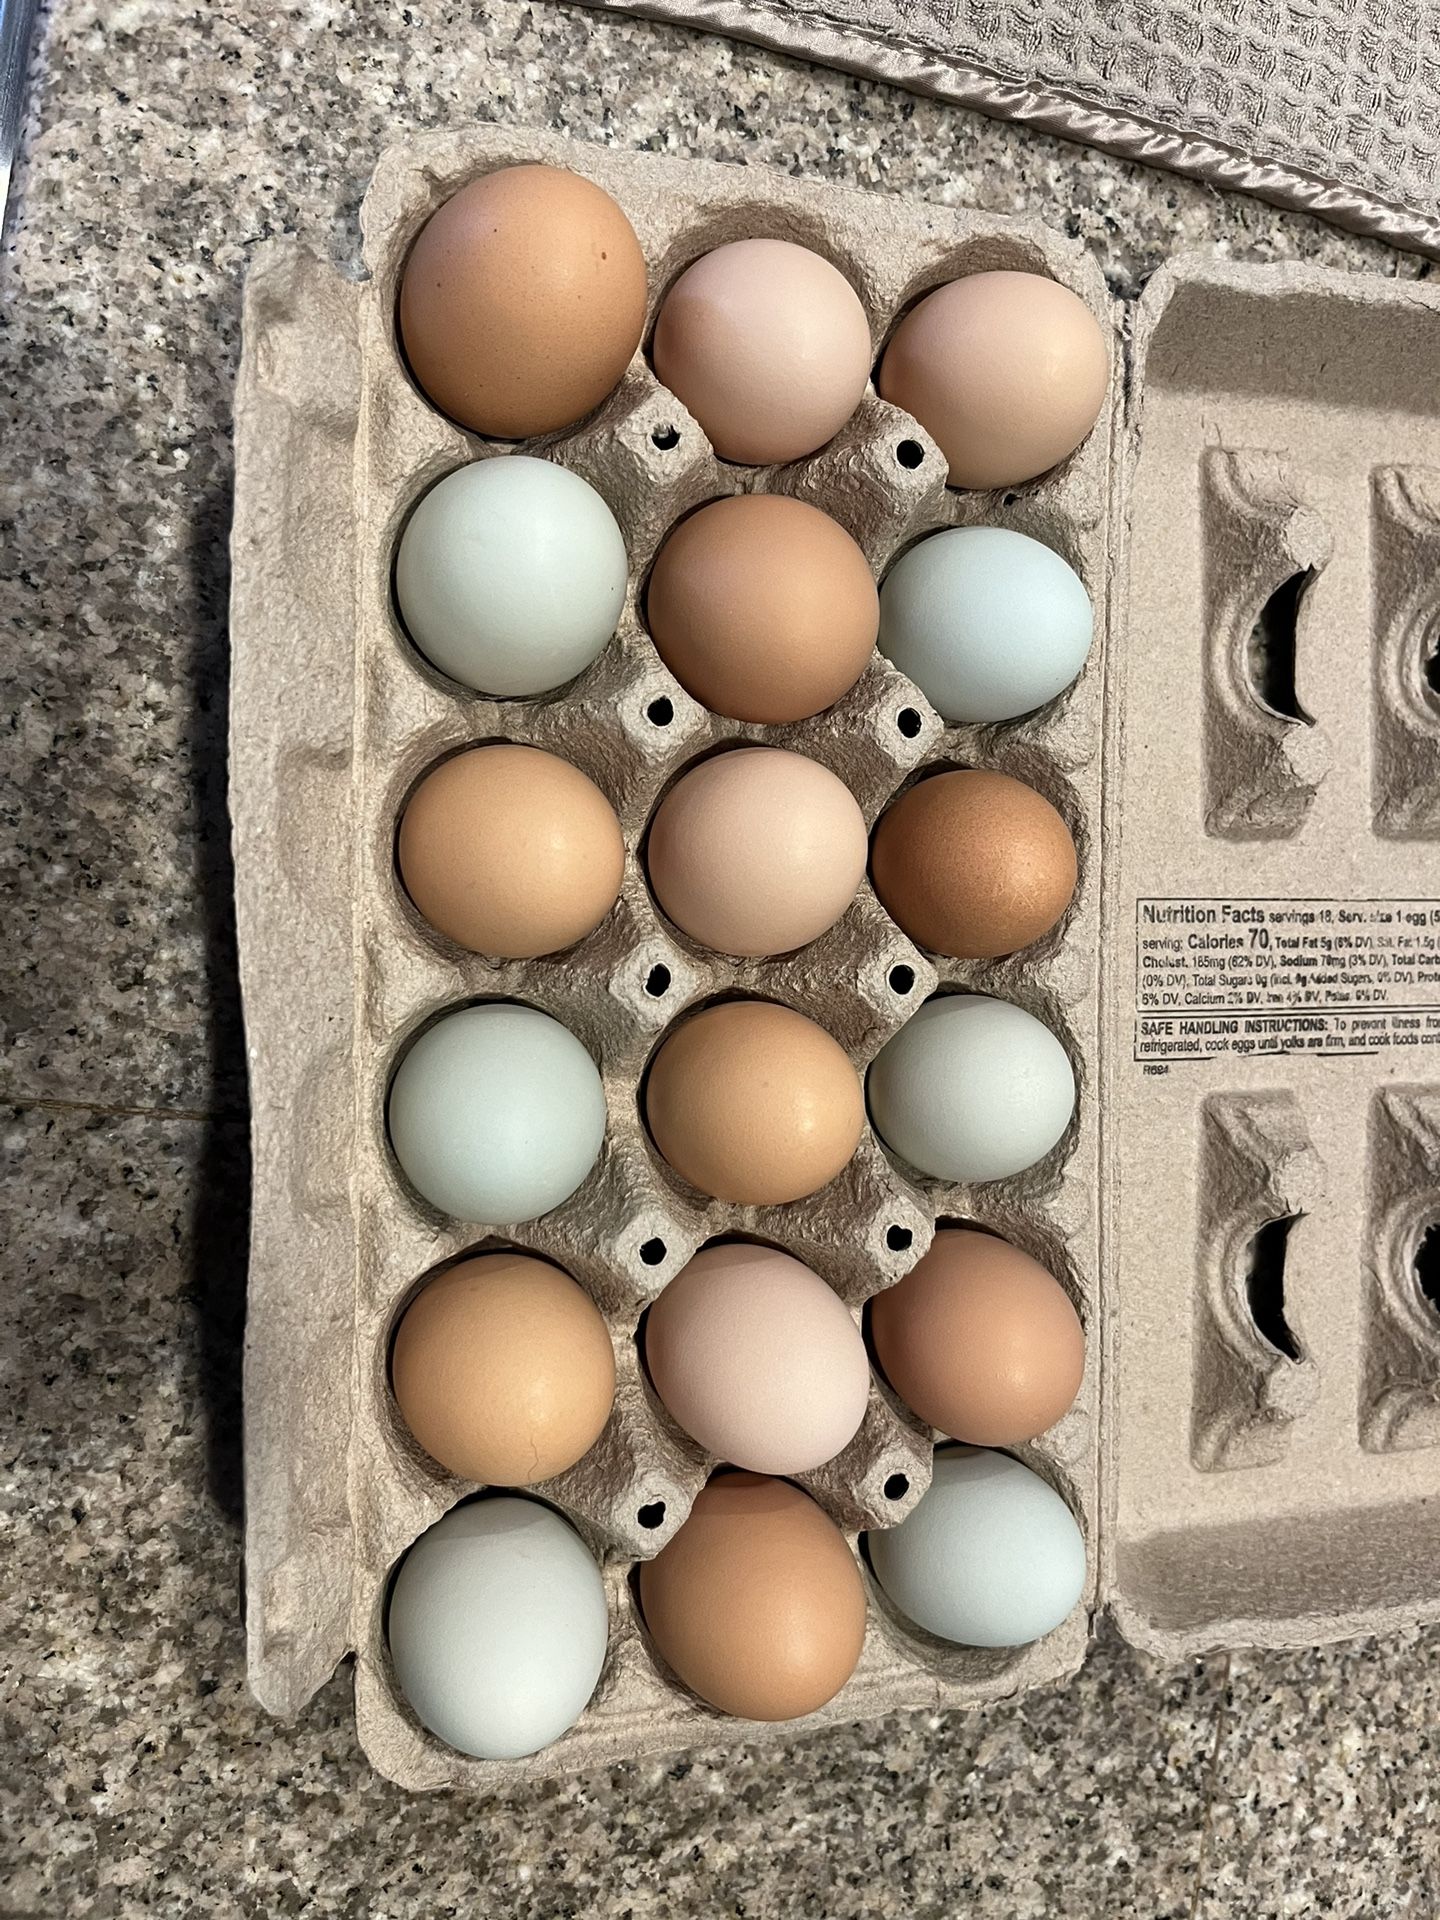 Farm Fresh Chicken Eggs Free Range